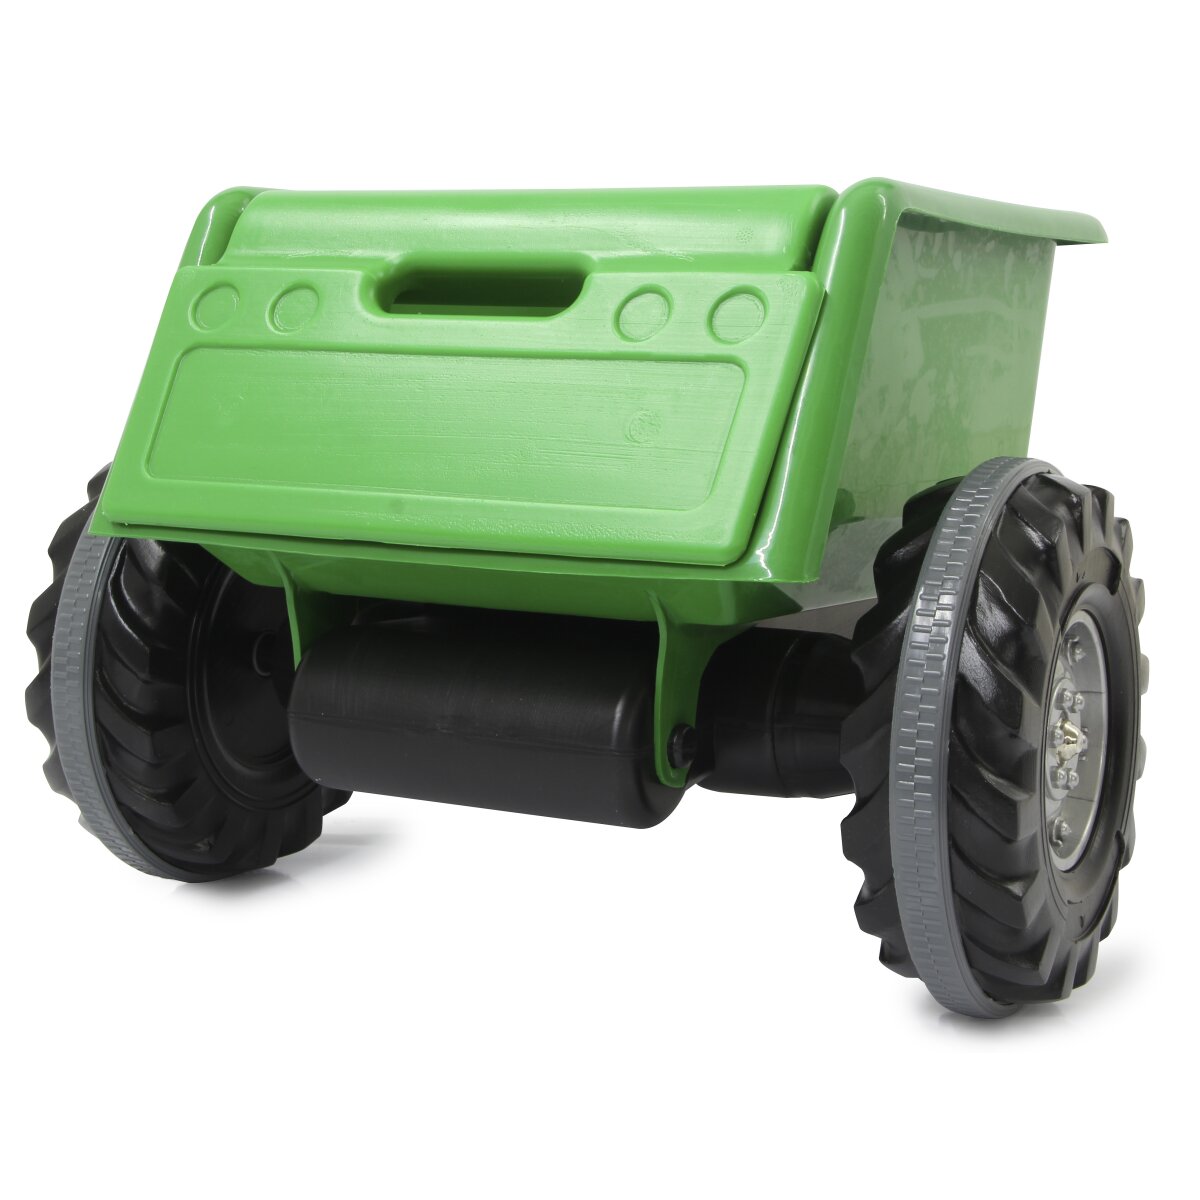 Anhänger Ride-on grün für Traktor Power Drag/Big Wheel